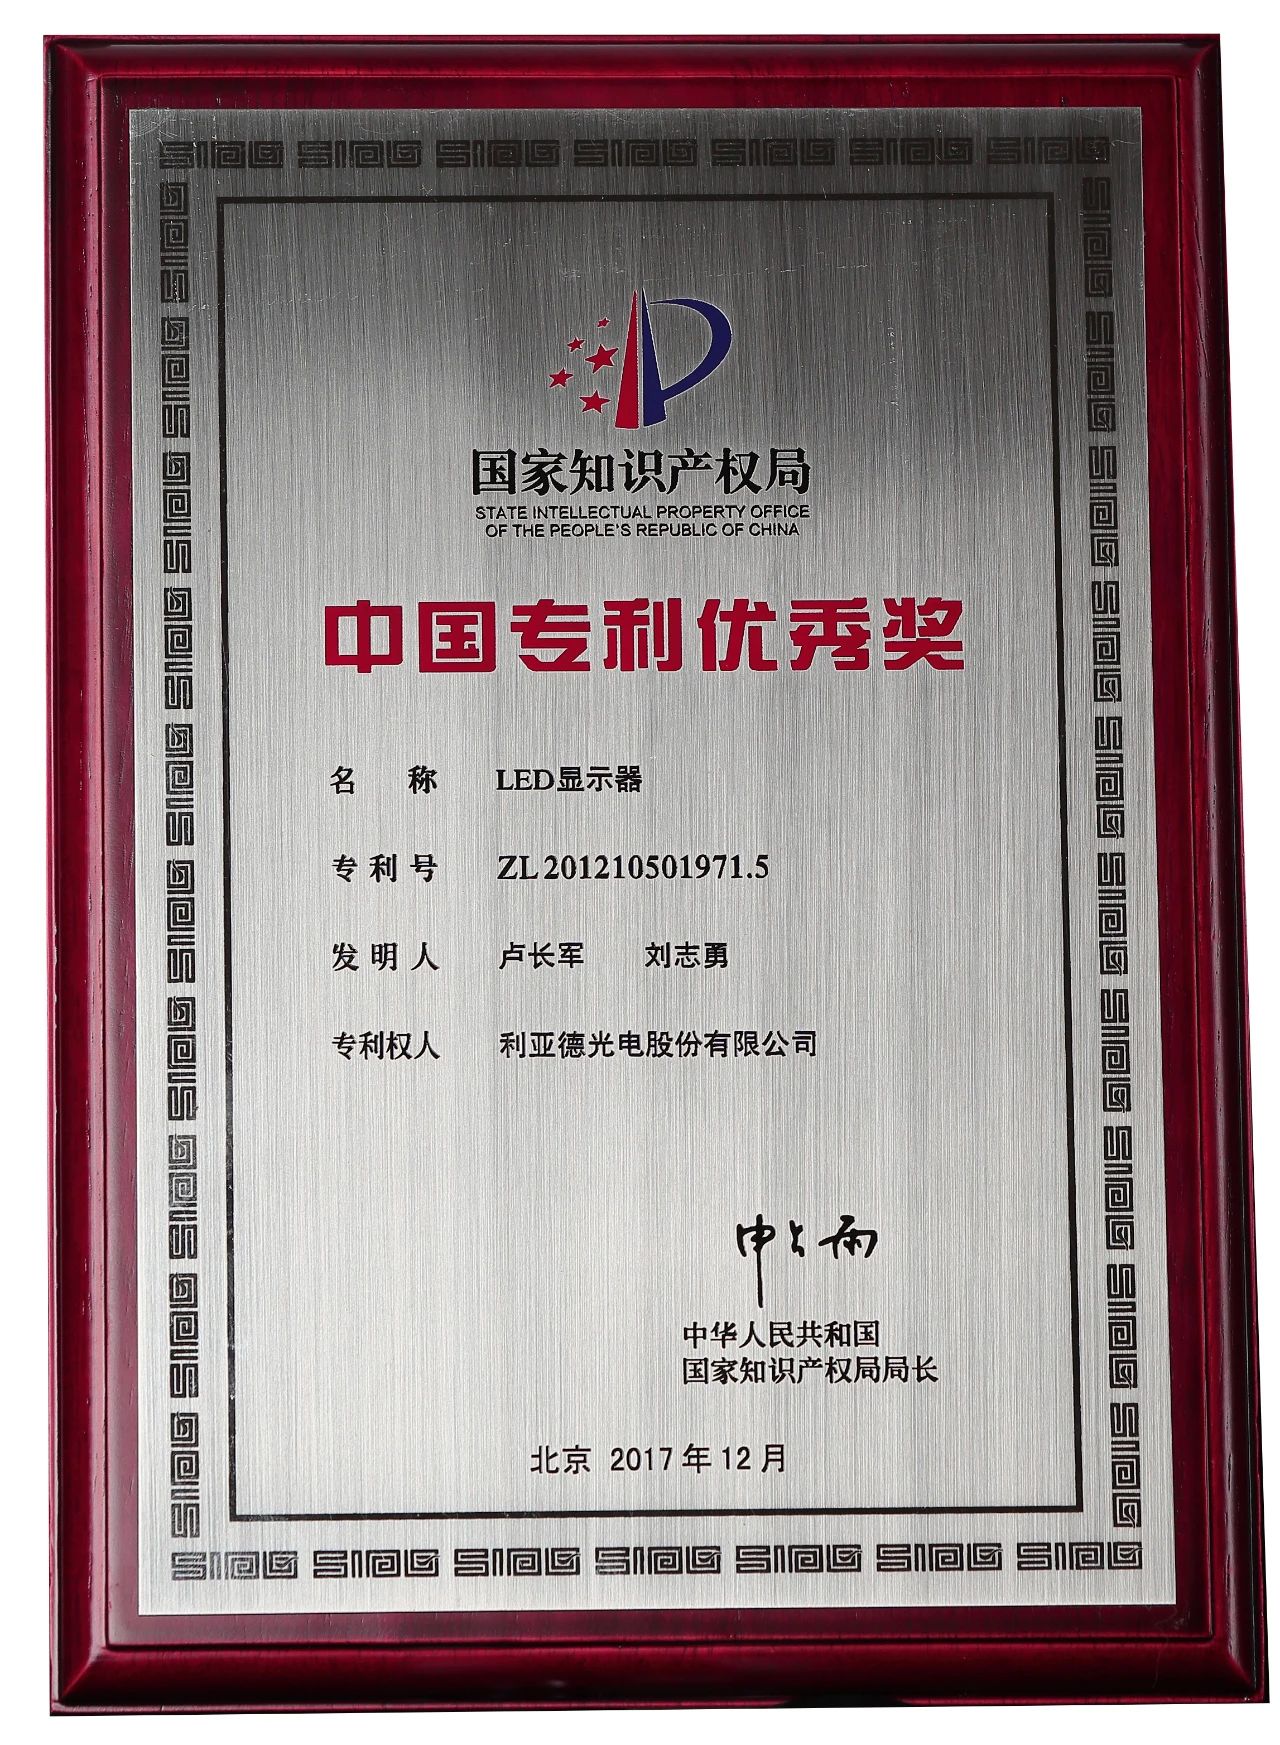 Leyard Won the "China Patent Excellence" Award